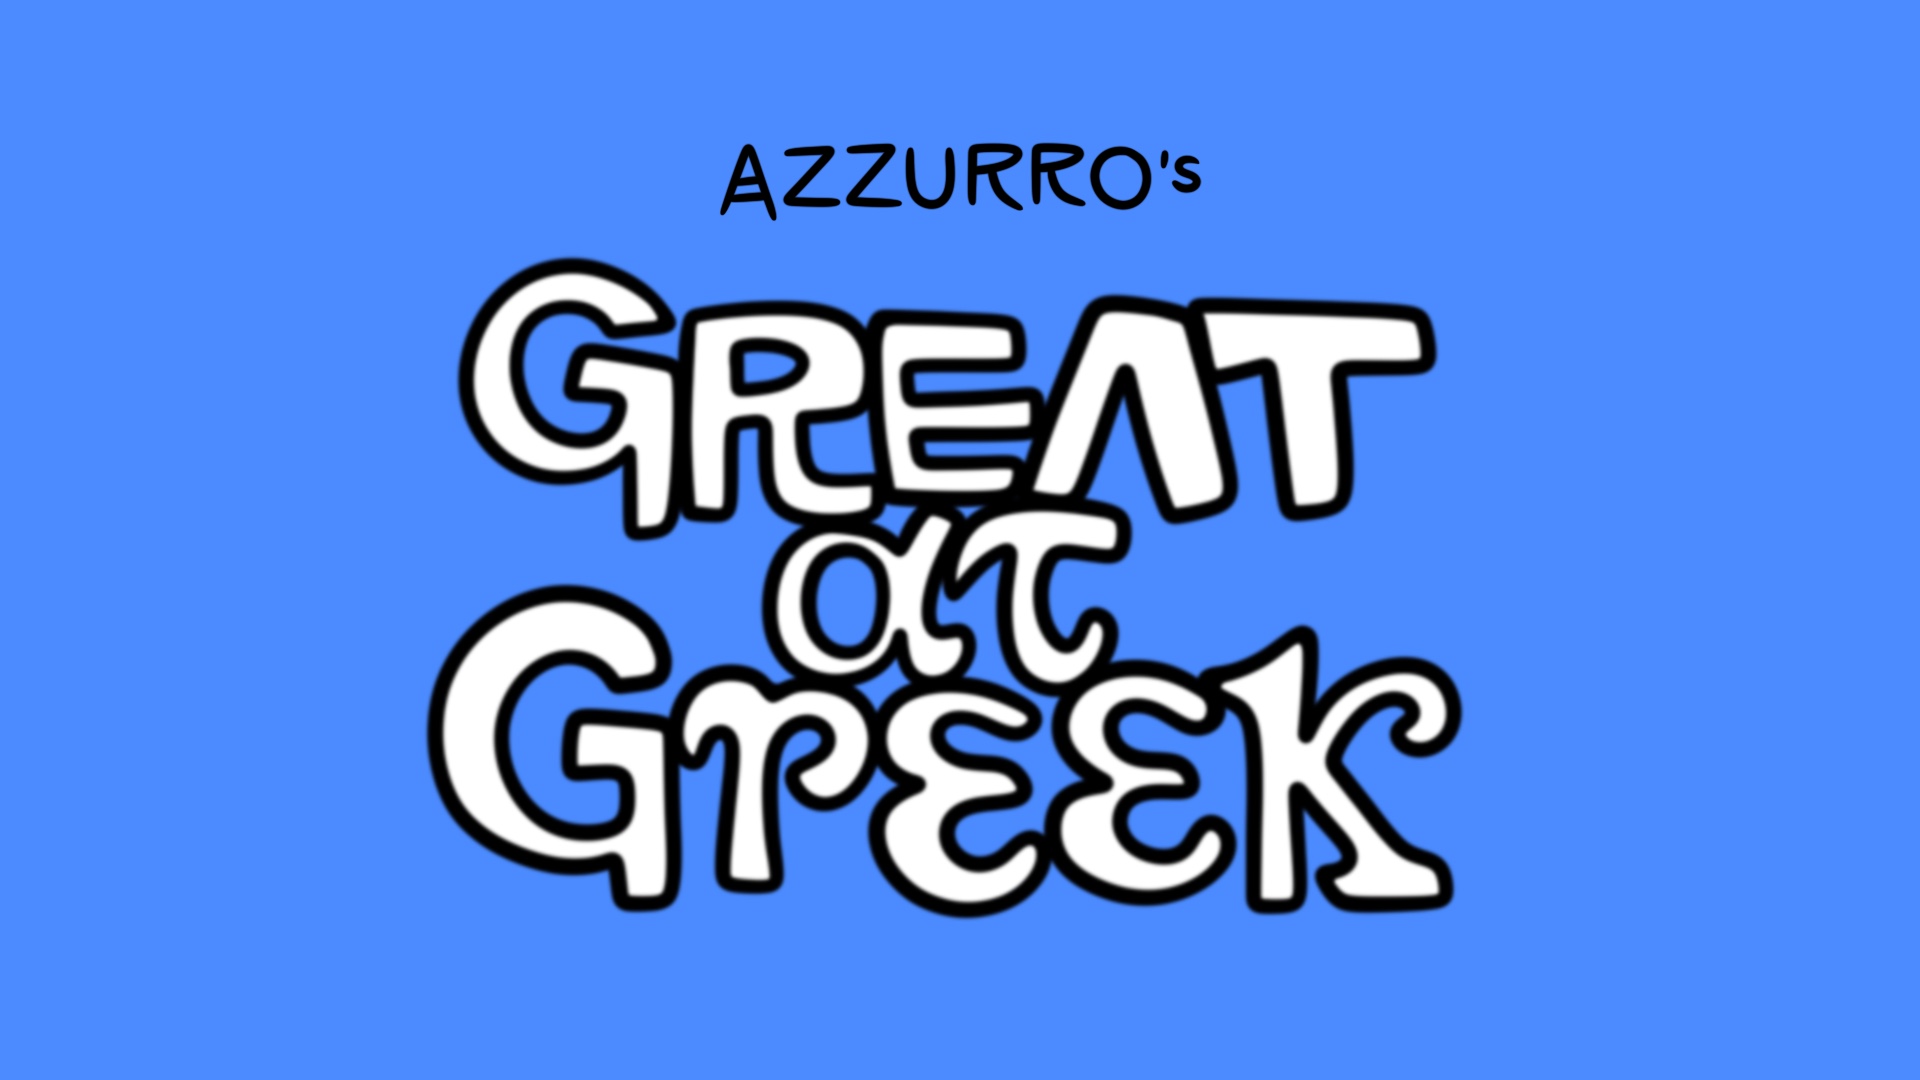 Great at Greek